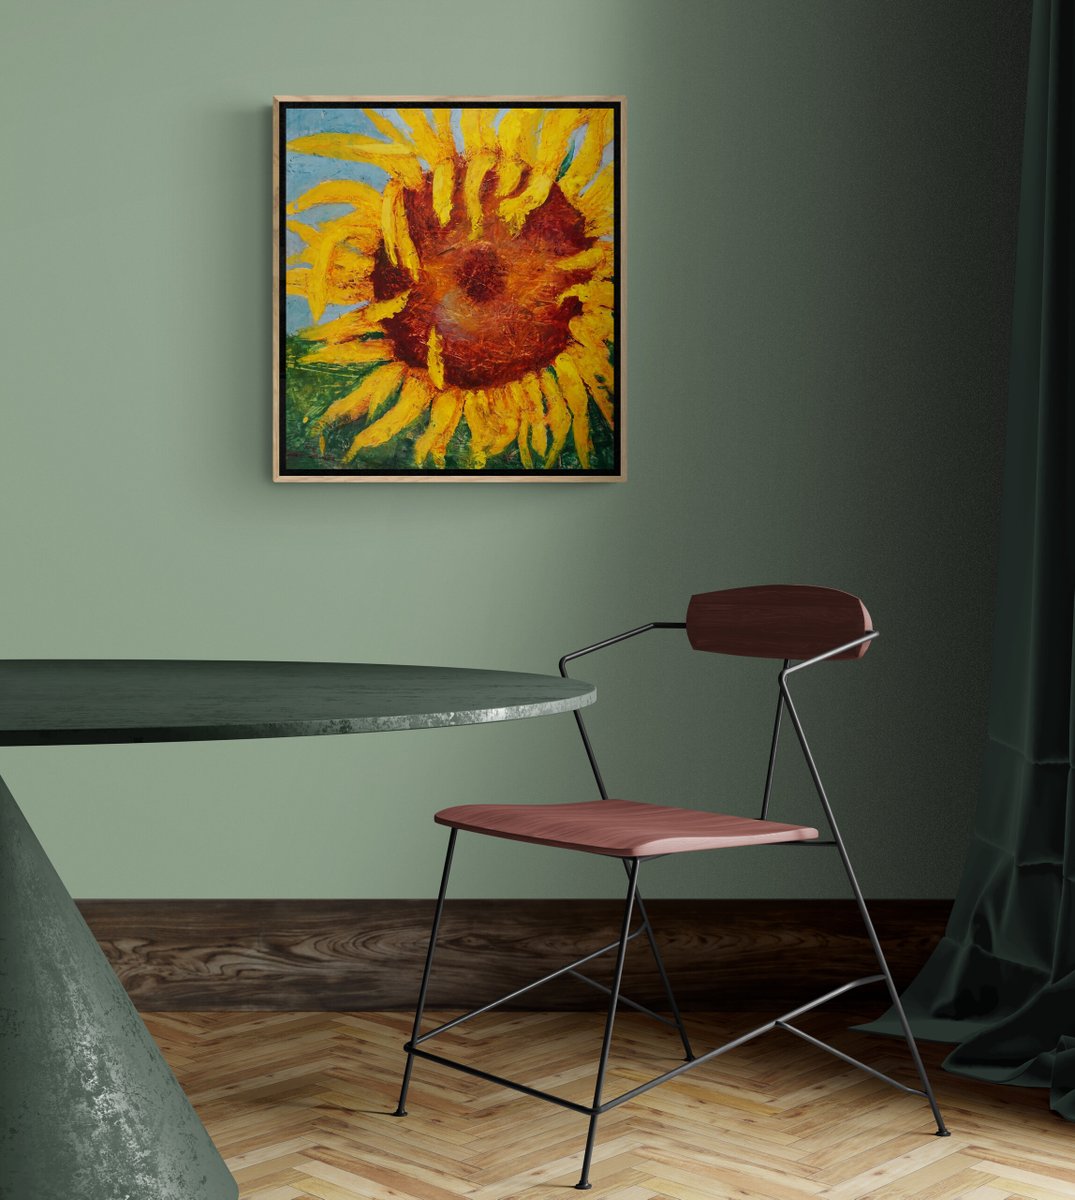 July
Pure #encaustic #painting hot #wax on #OSB via @artfinder 
#sunflower #summer #homedecor #homedecoration #fineartforsale #AYearForArt #BuyIntoArt
artfinder.com/product/july-h…